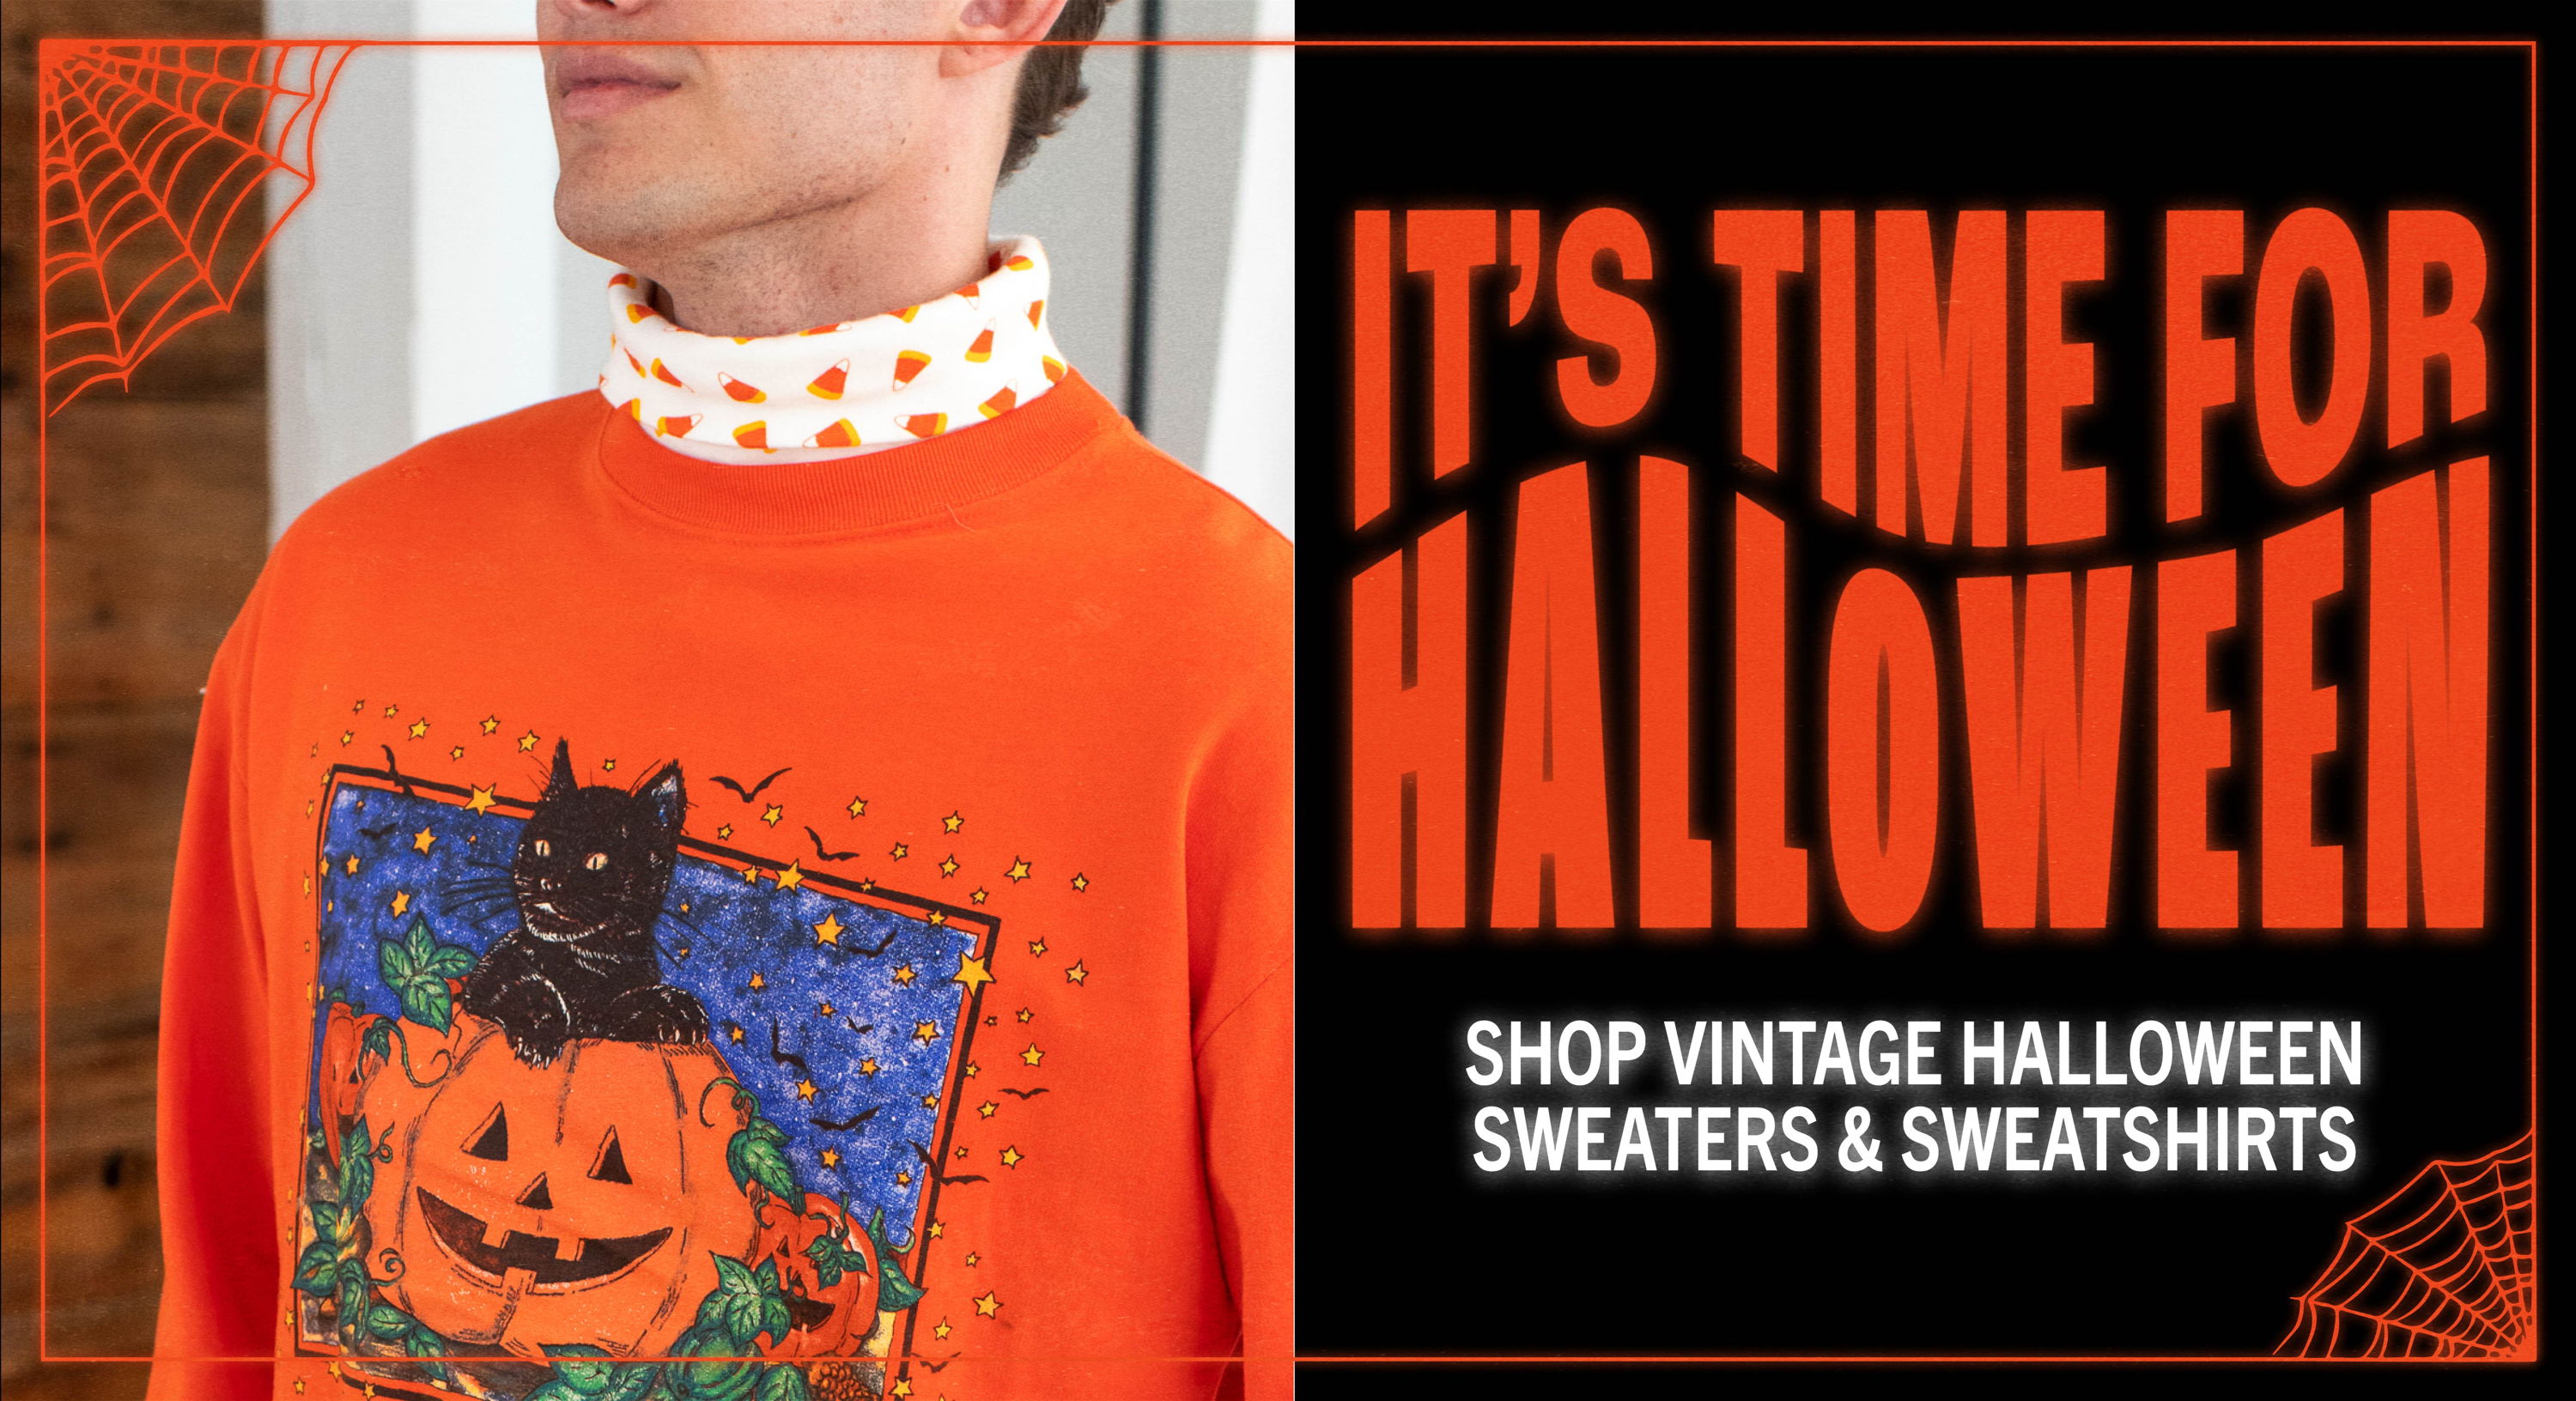 It's Time for Halloween. Shop vintage Halloween sweaters & sweatshirts